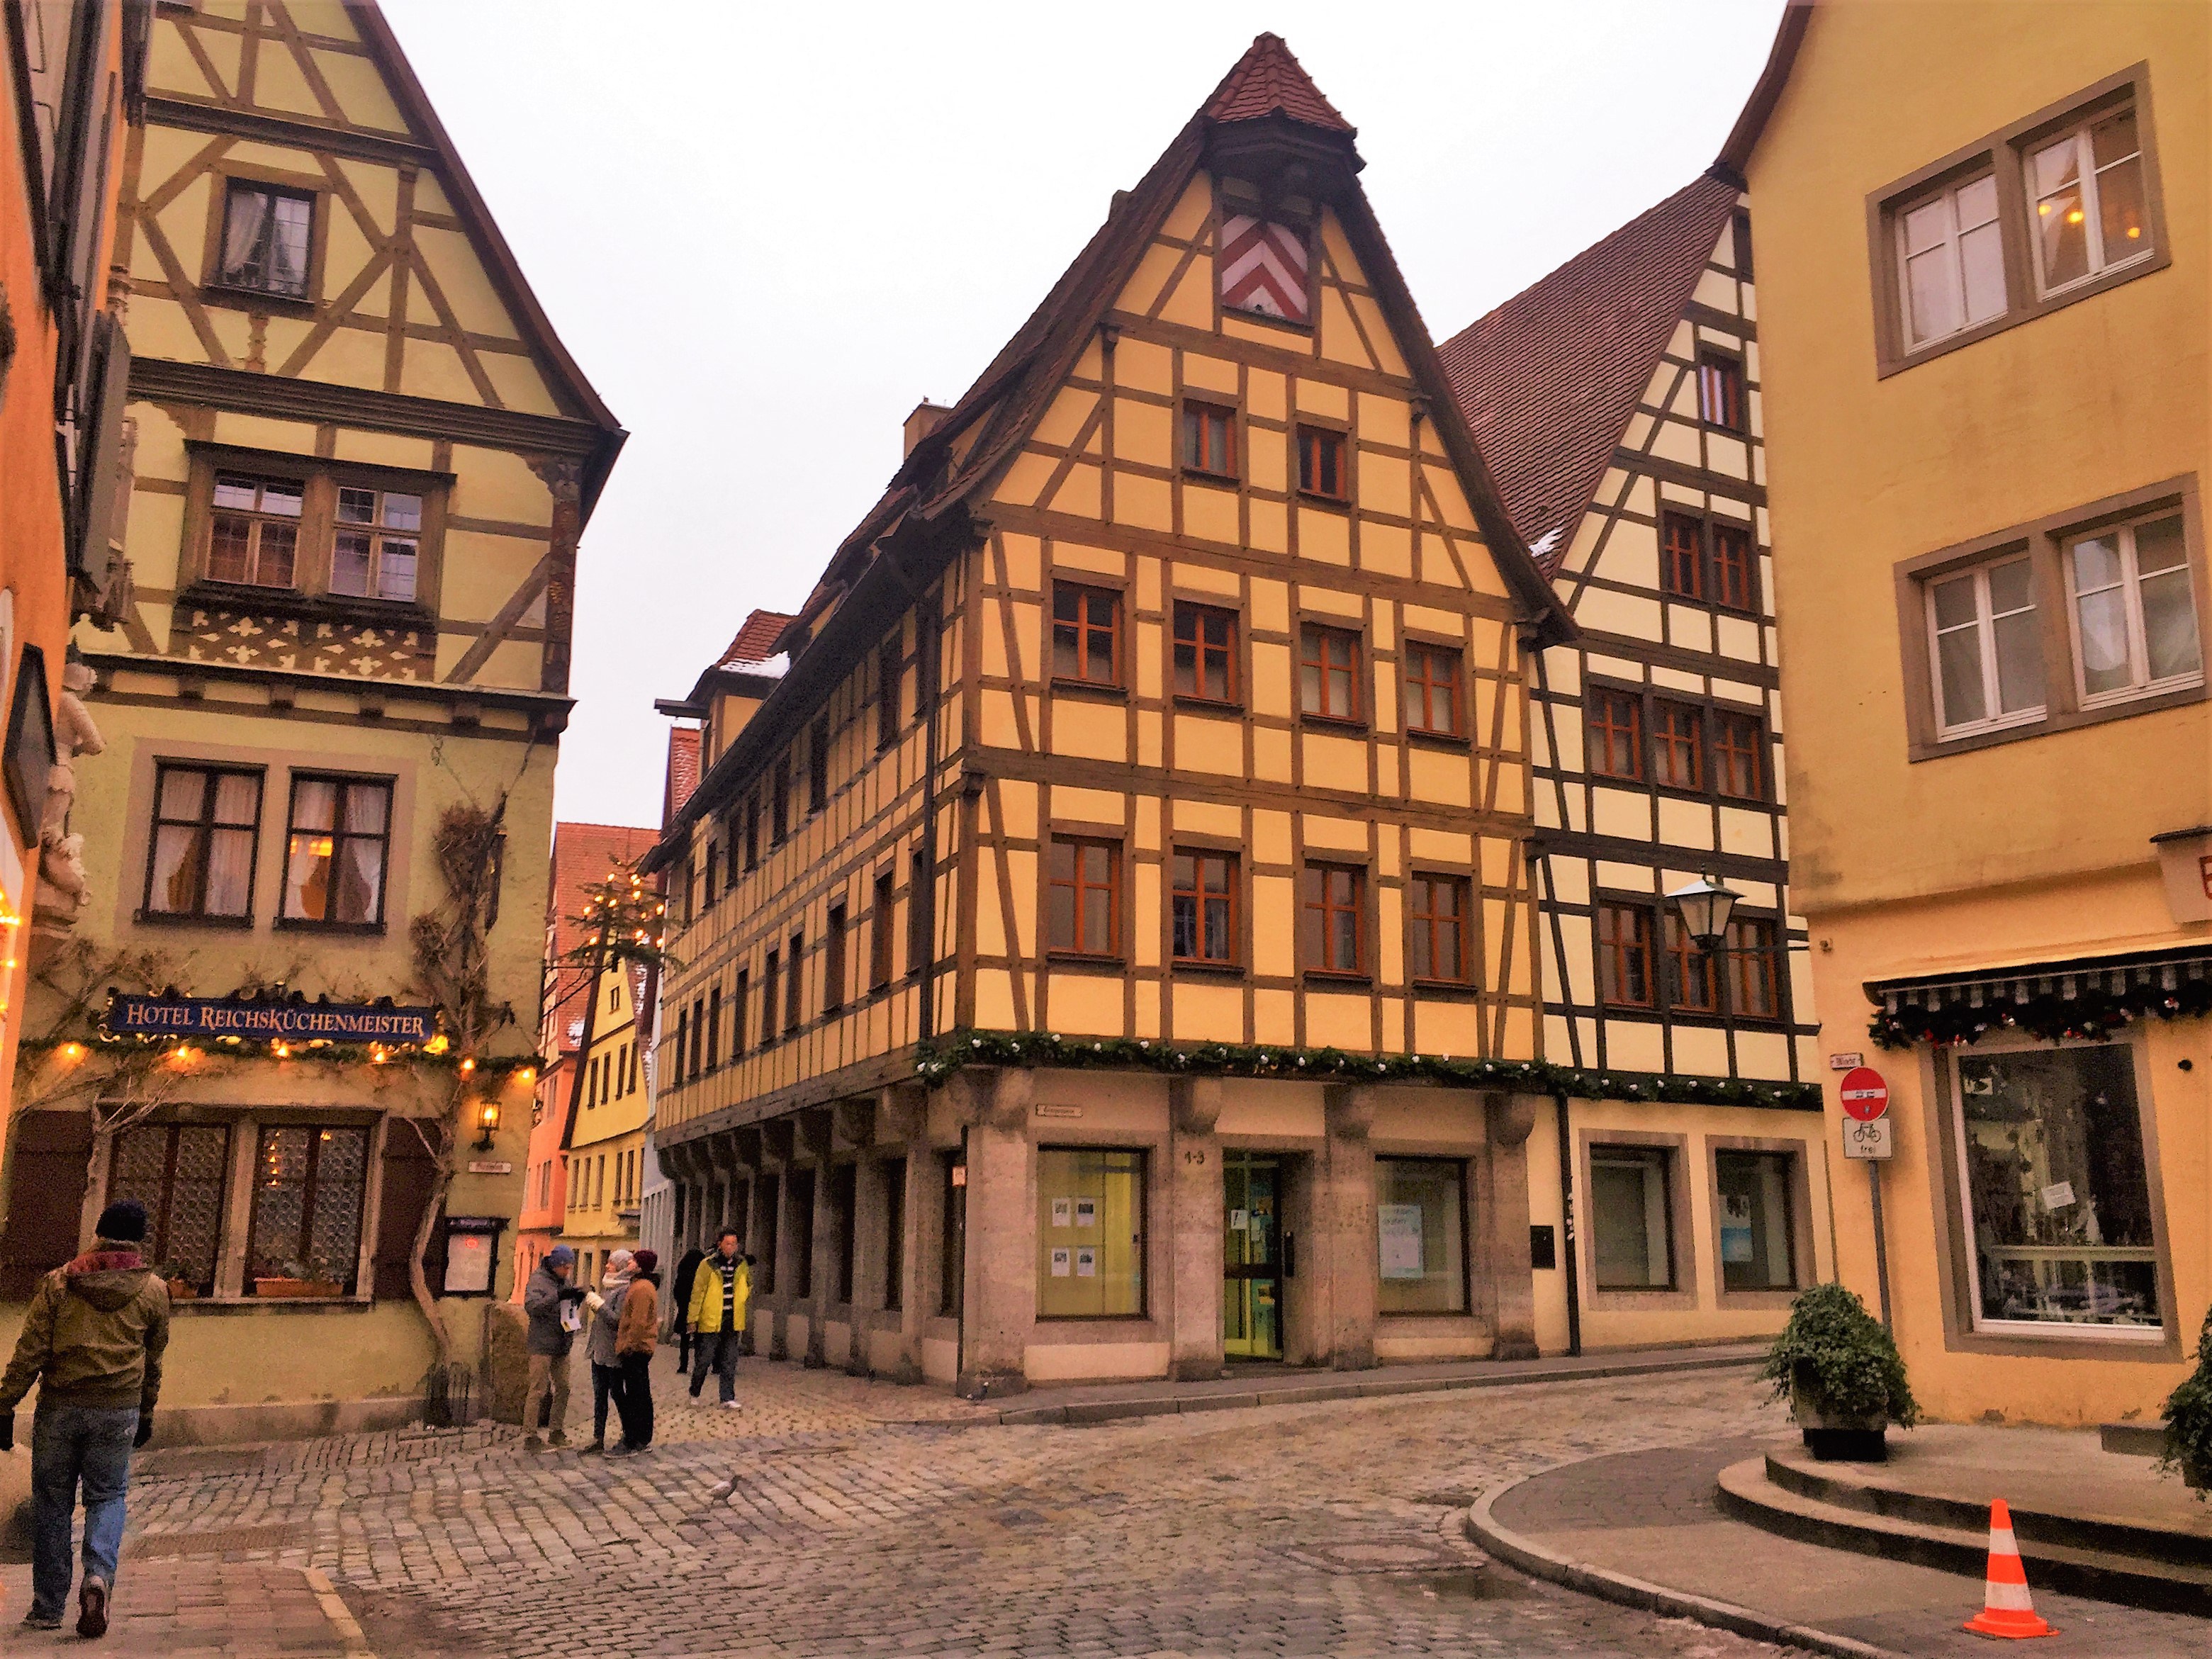 Rothenburg ob der Tauber, Germany | She Went To Spain